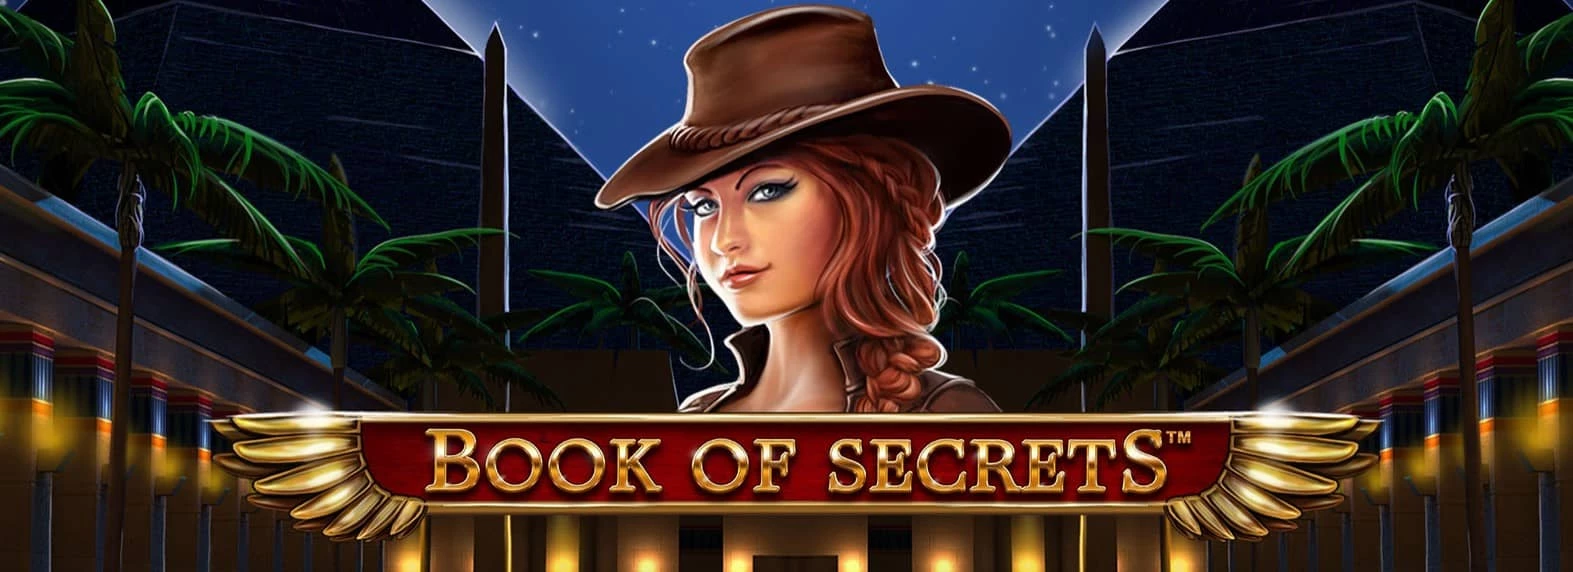 Book of secrets slot cover